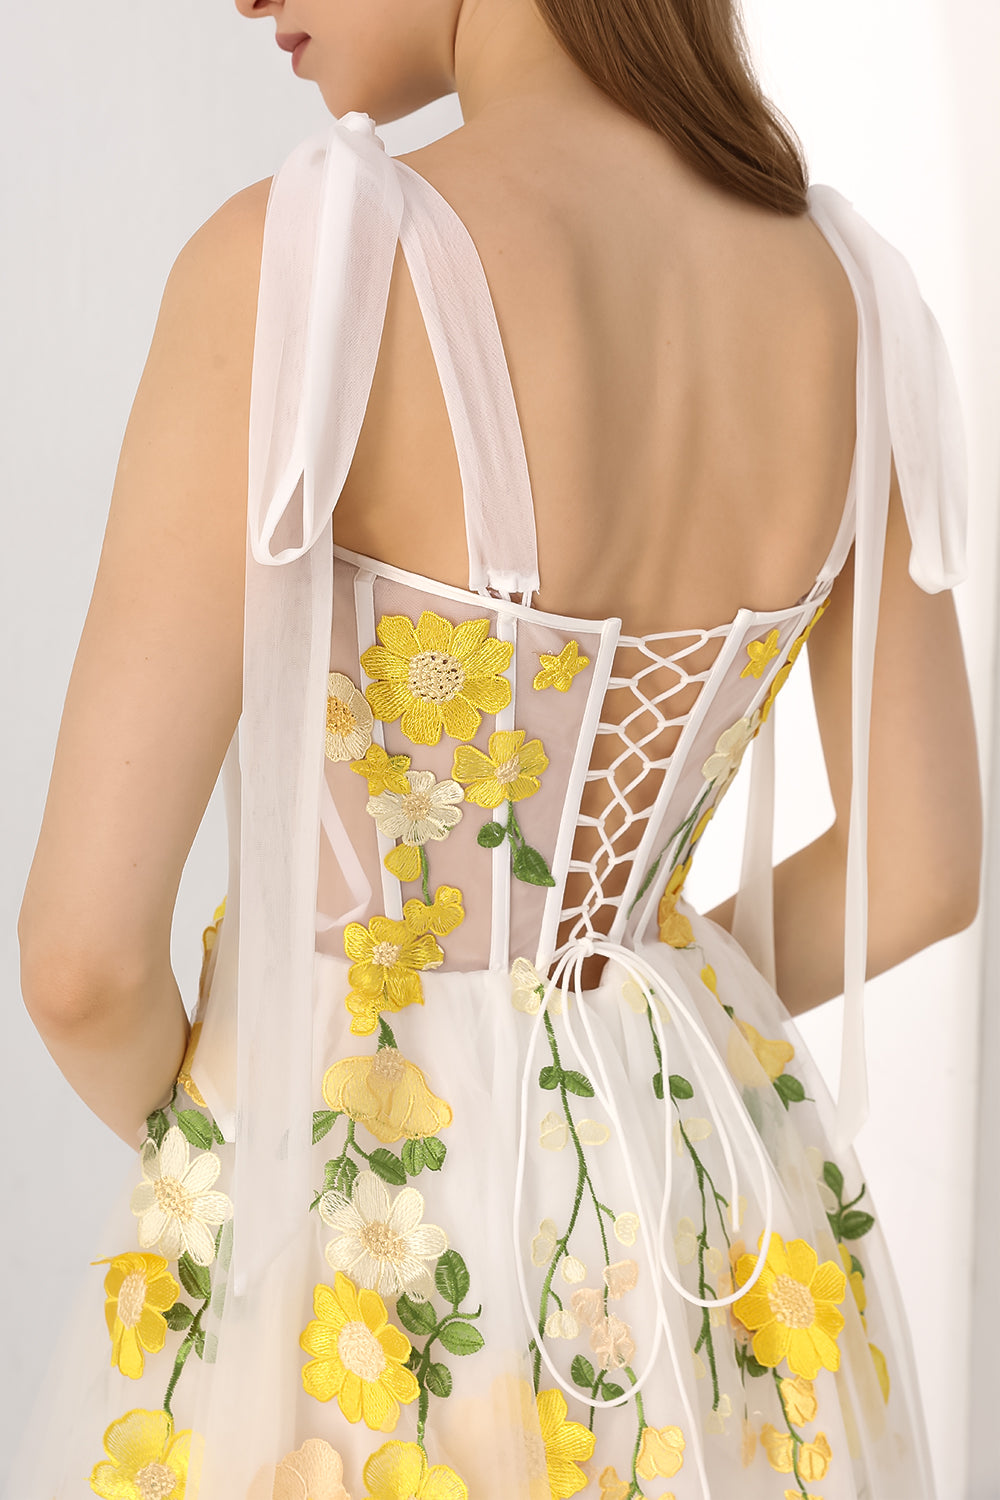 Corset Yellow Floral Applique Ivory Slit Dress with Tie Straps